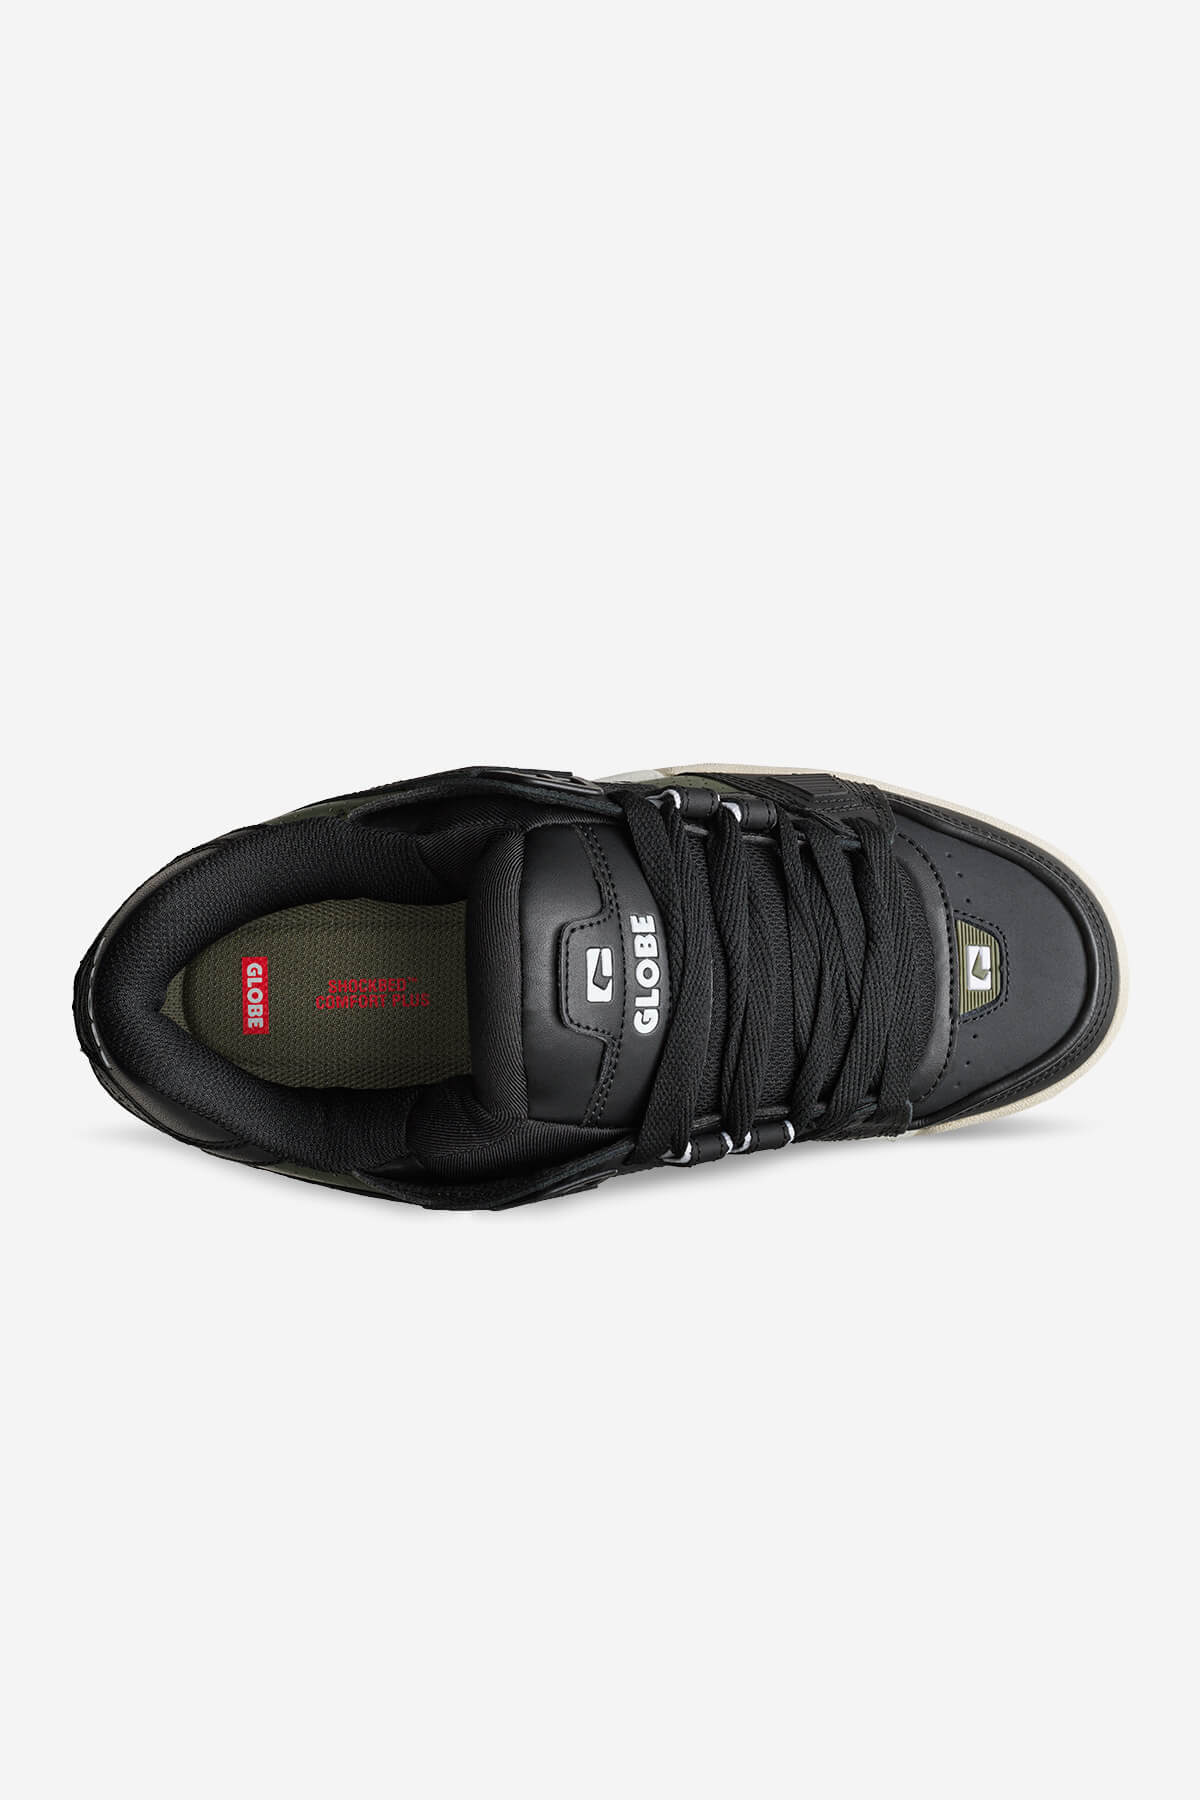 Globe - Sabre - Noir/Combat - skateboard Chaussures